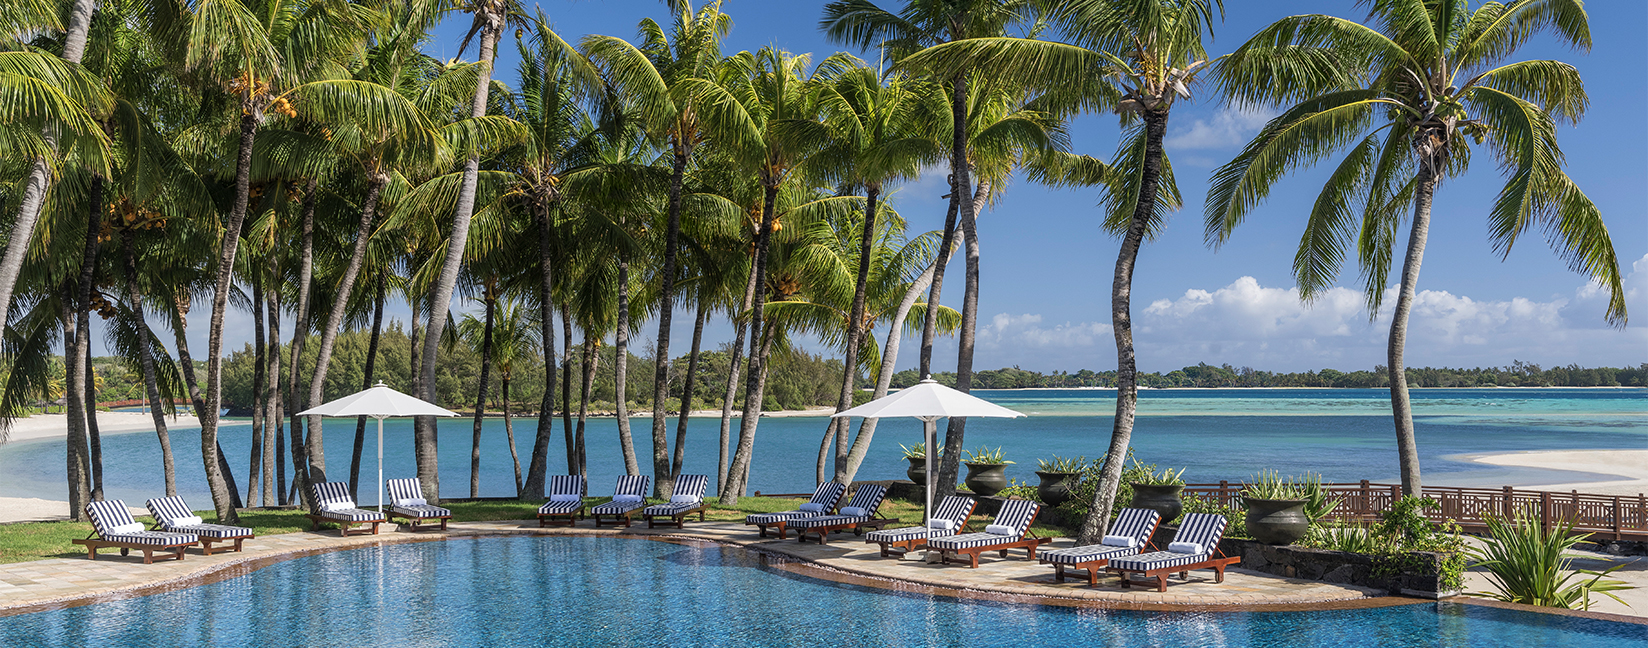 Pool Mauritius Resort